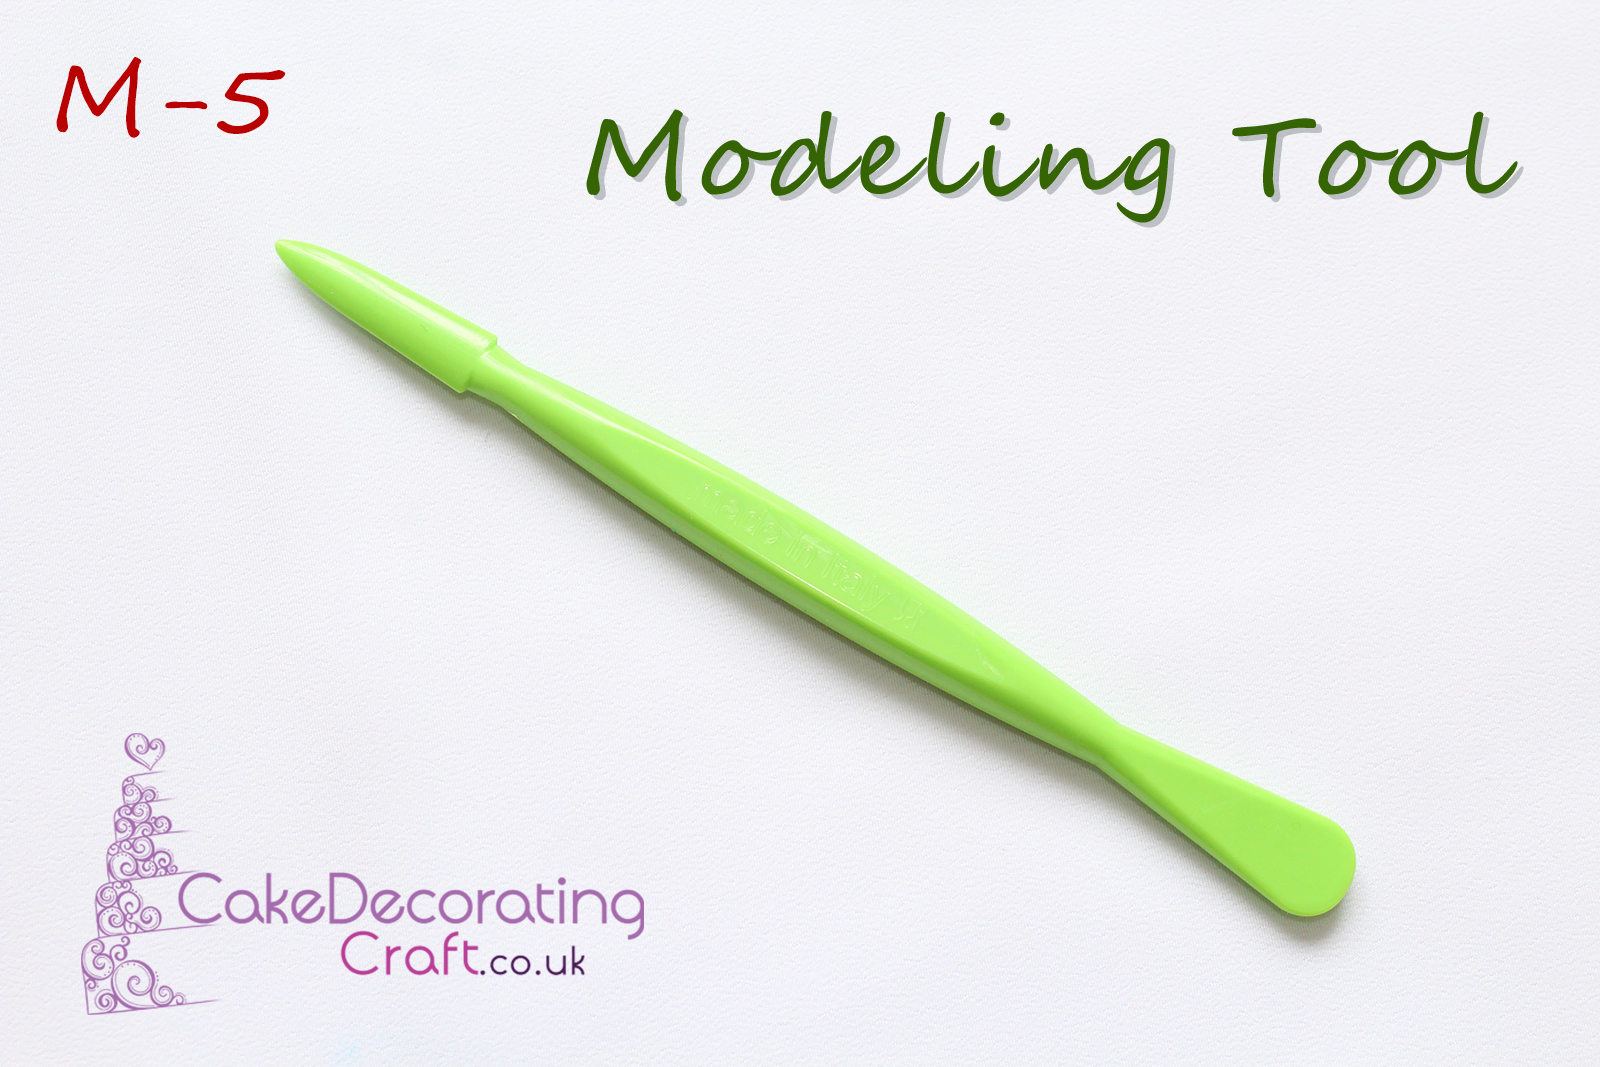 Cake Decorating Craft Modelling Tools | Double Ended | Gum Paste Flower Paste Modelling Sugar Paste Craft | M-5